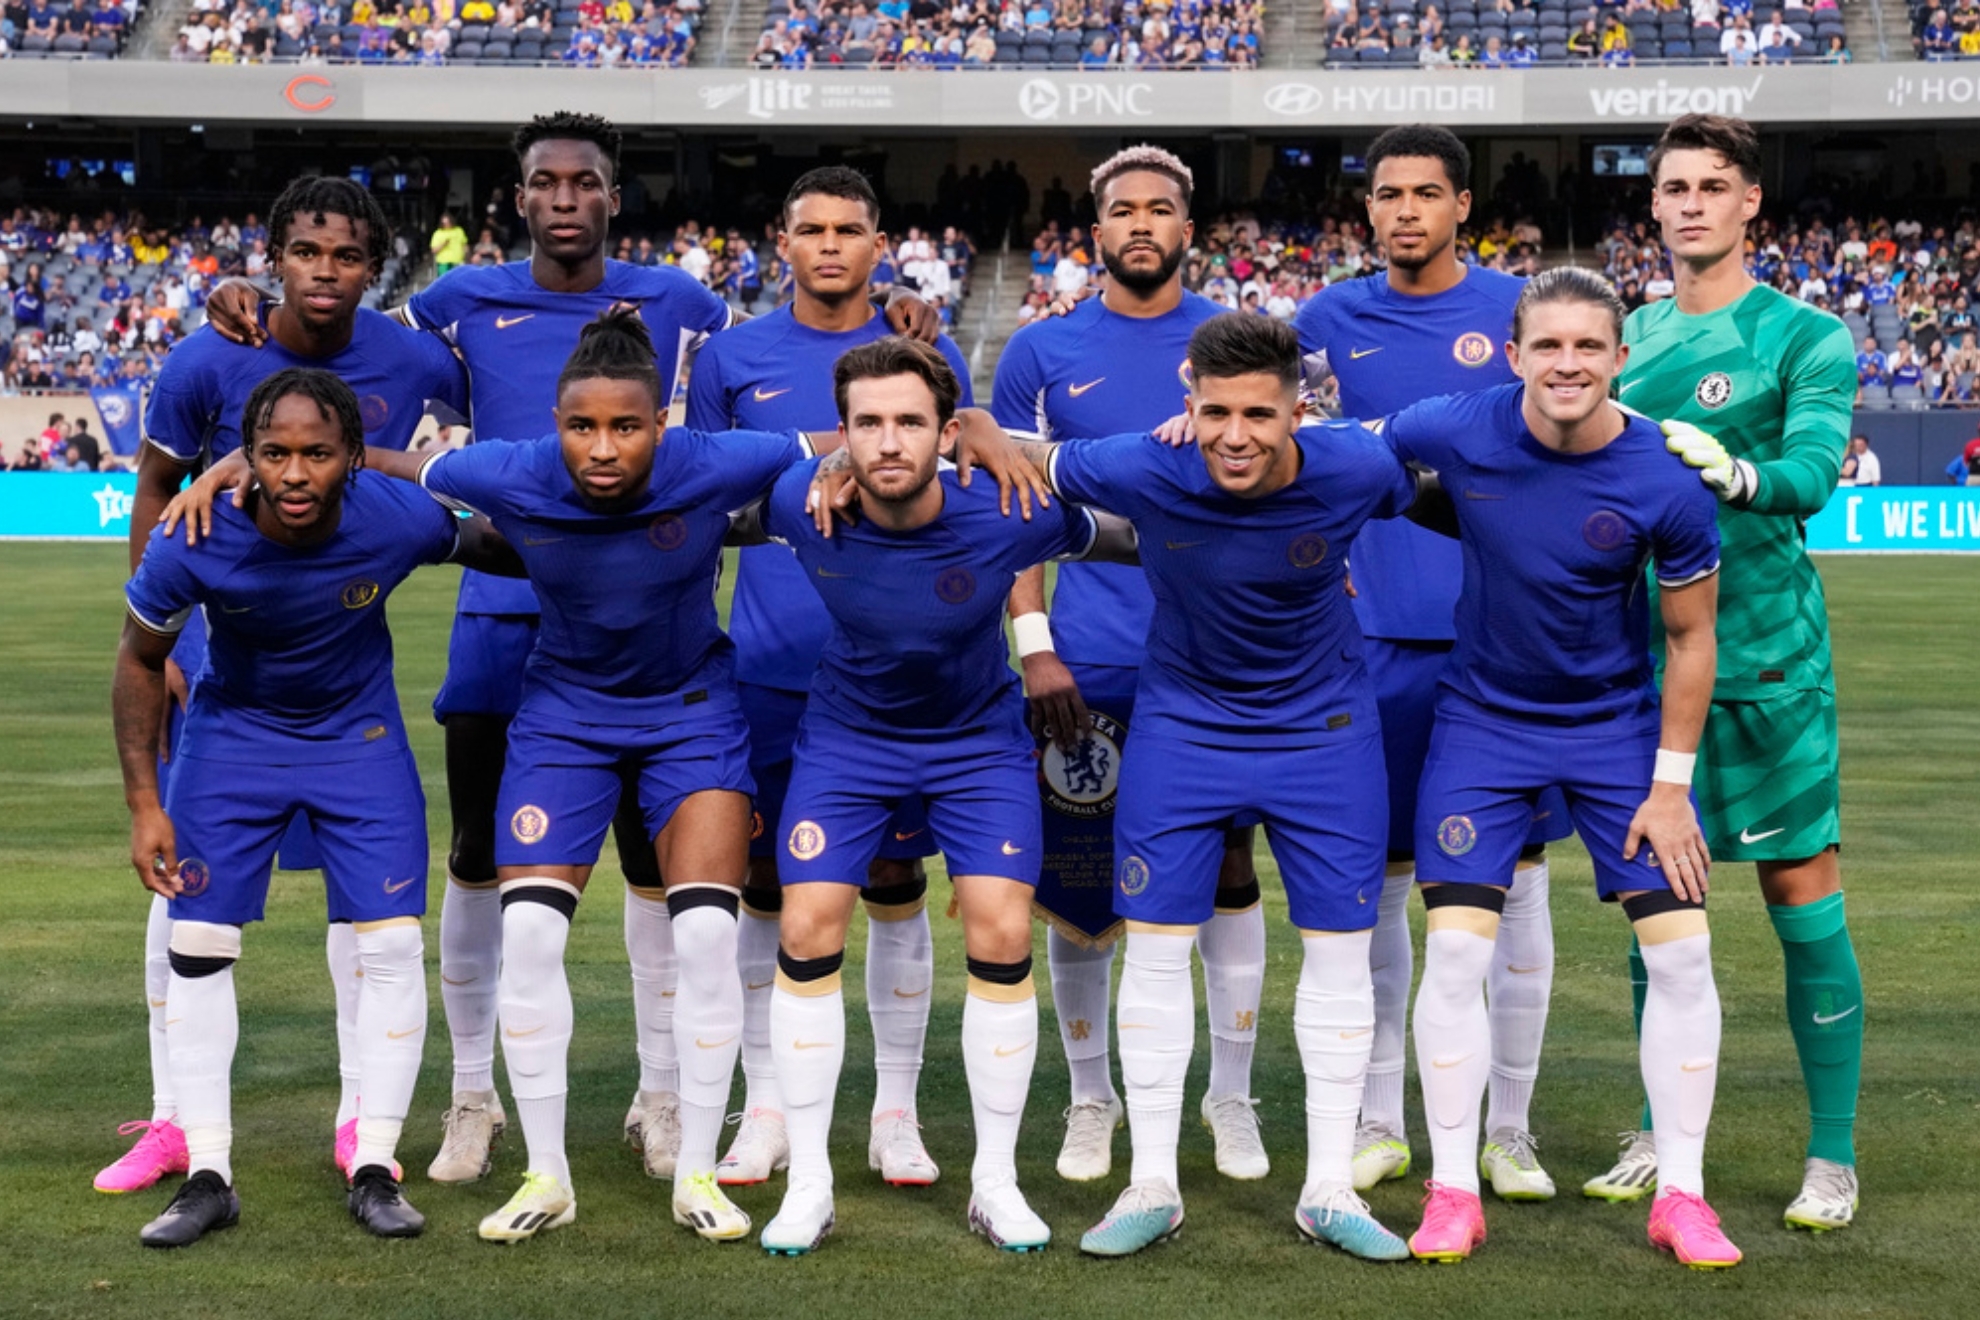 Chelsea will no longer don the sponsor-less shirts